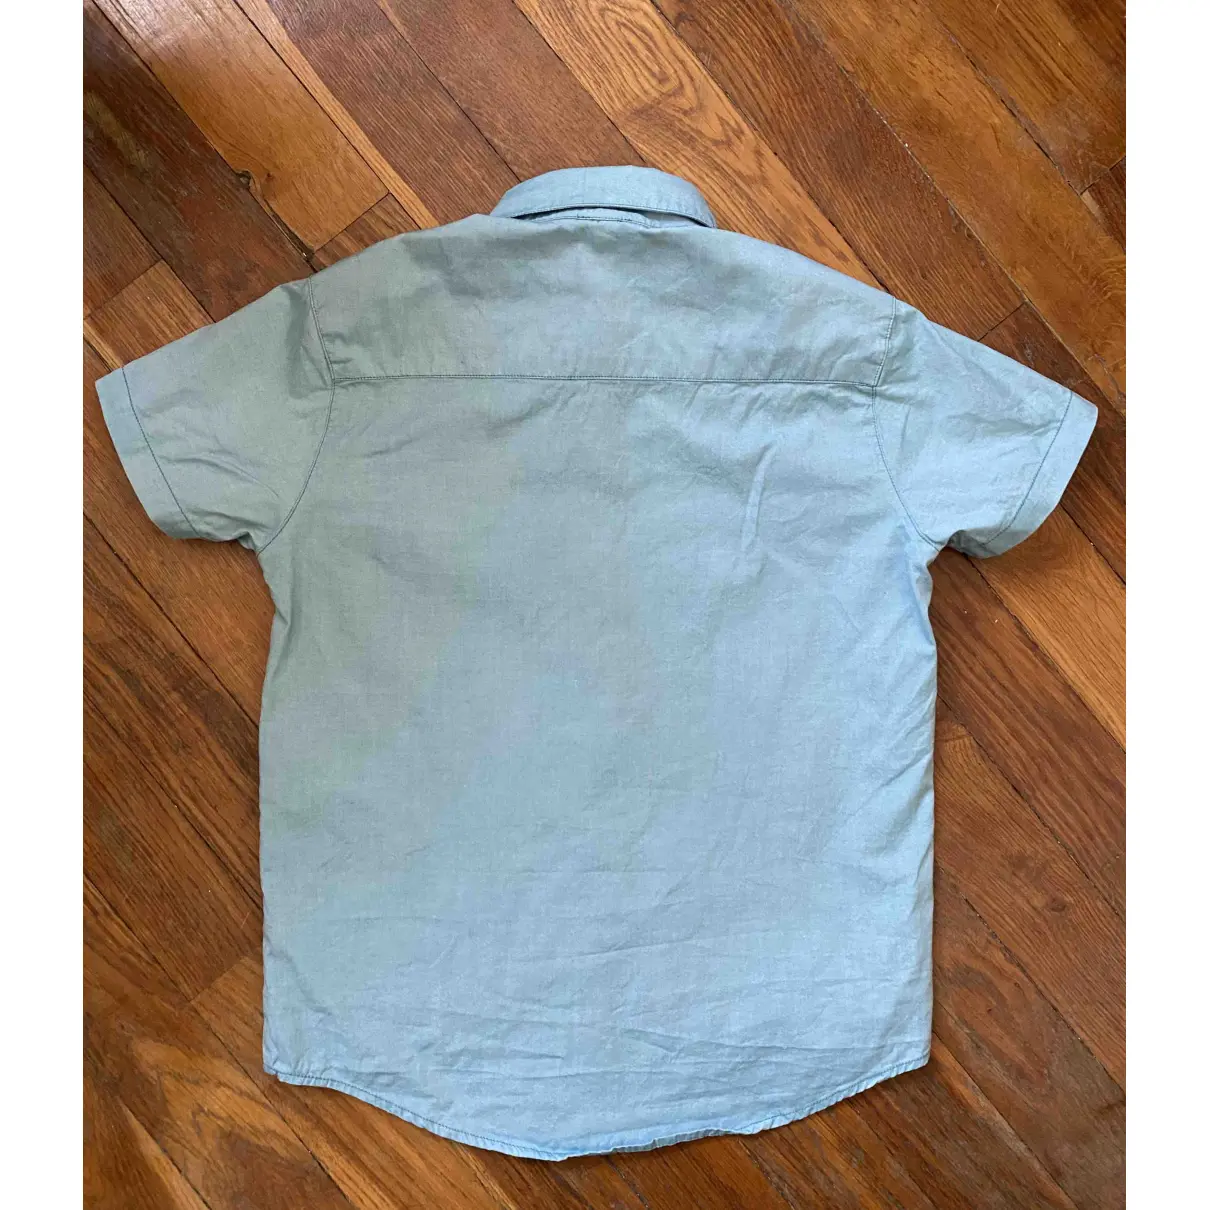 Buy American Apparel Shirt online